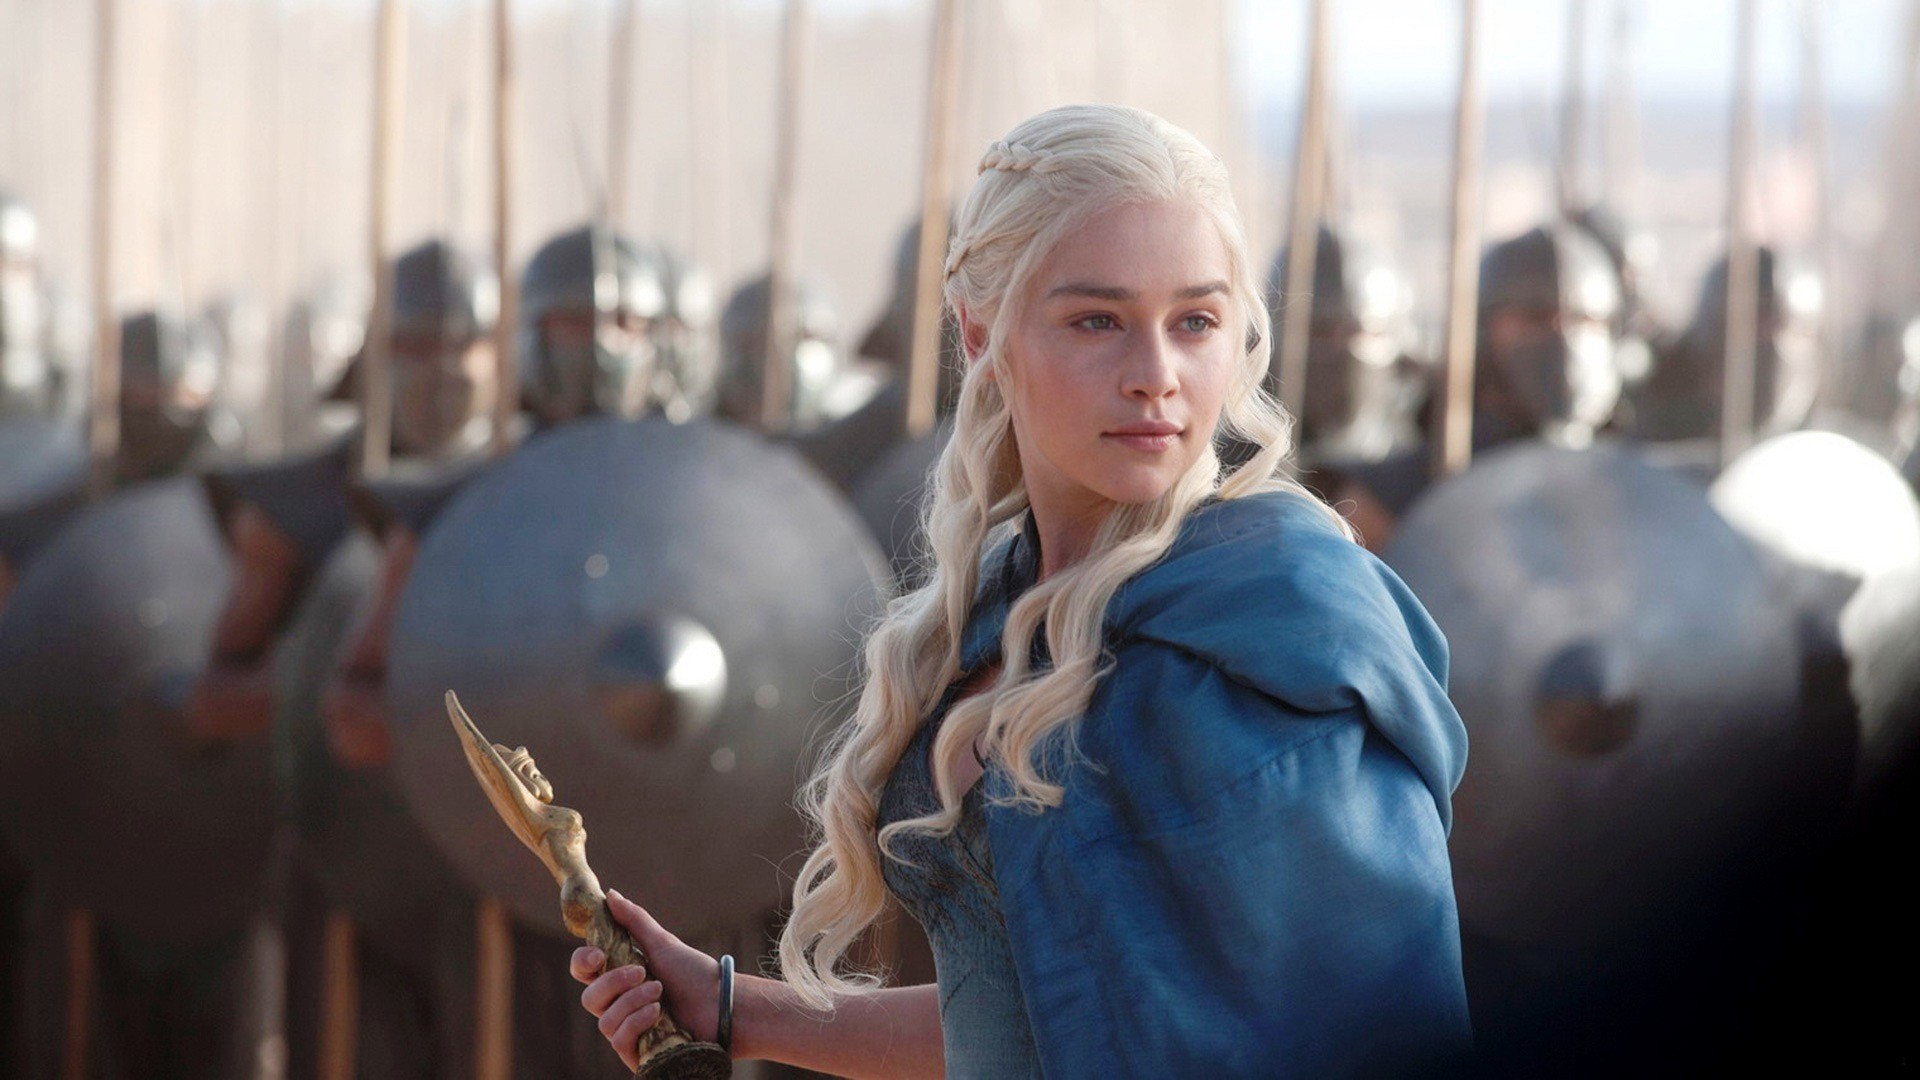 People 1920x1080 Daenerys Targaryen Emilia Clarke Game of Thrones women TV series fantasy girl blonde actress celebrity